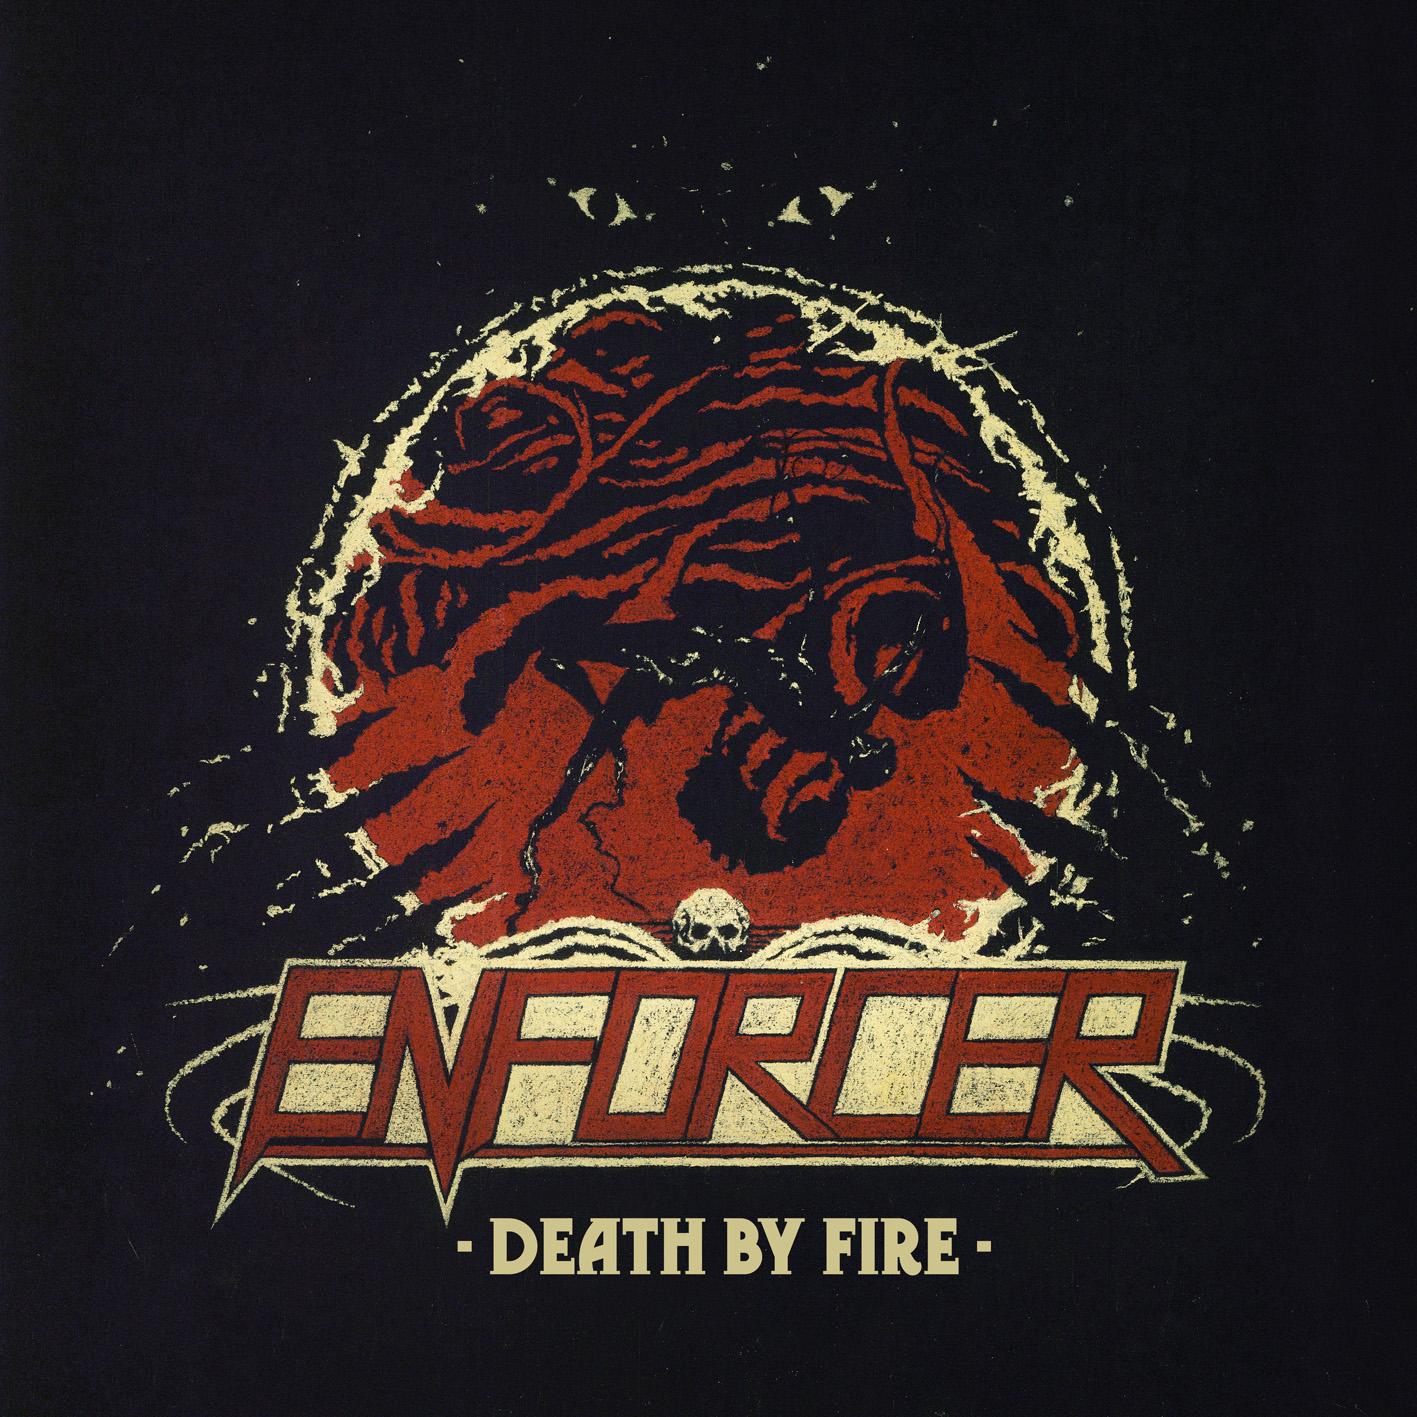 Enforcer, Death By Fire (Nuclear Blast)